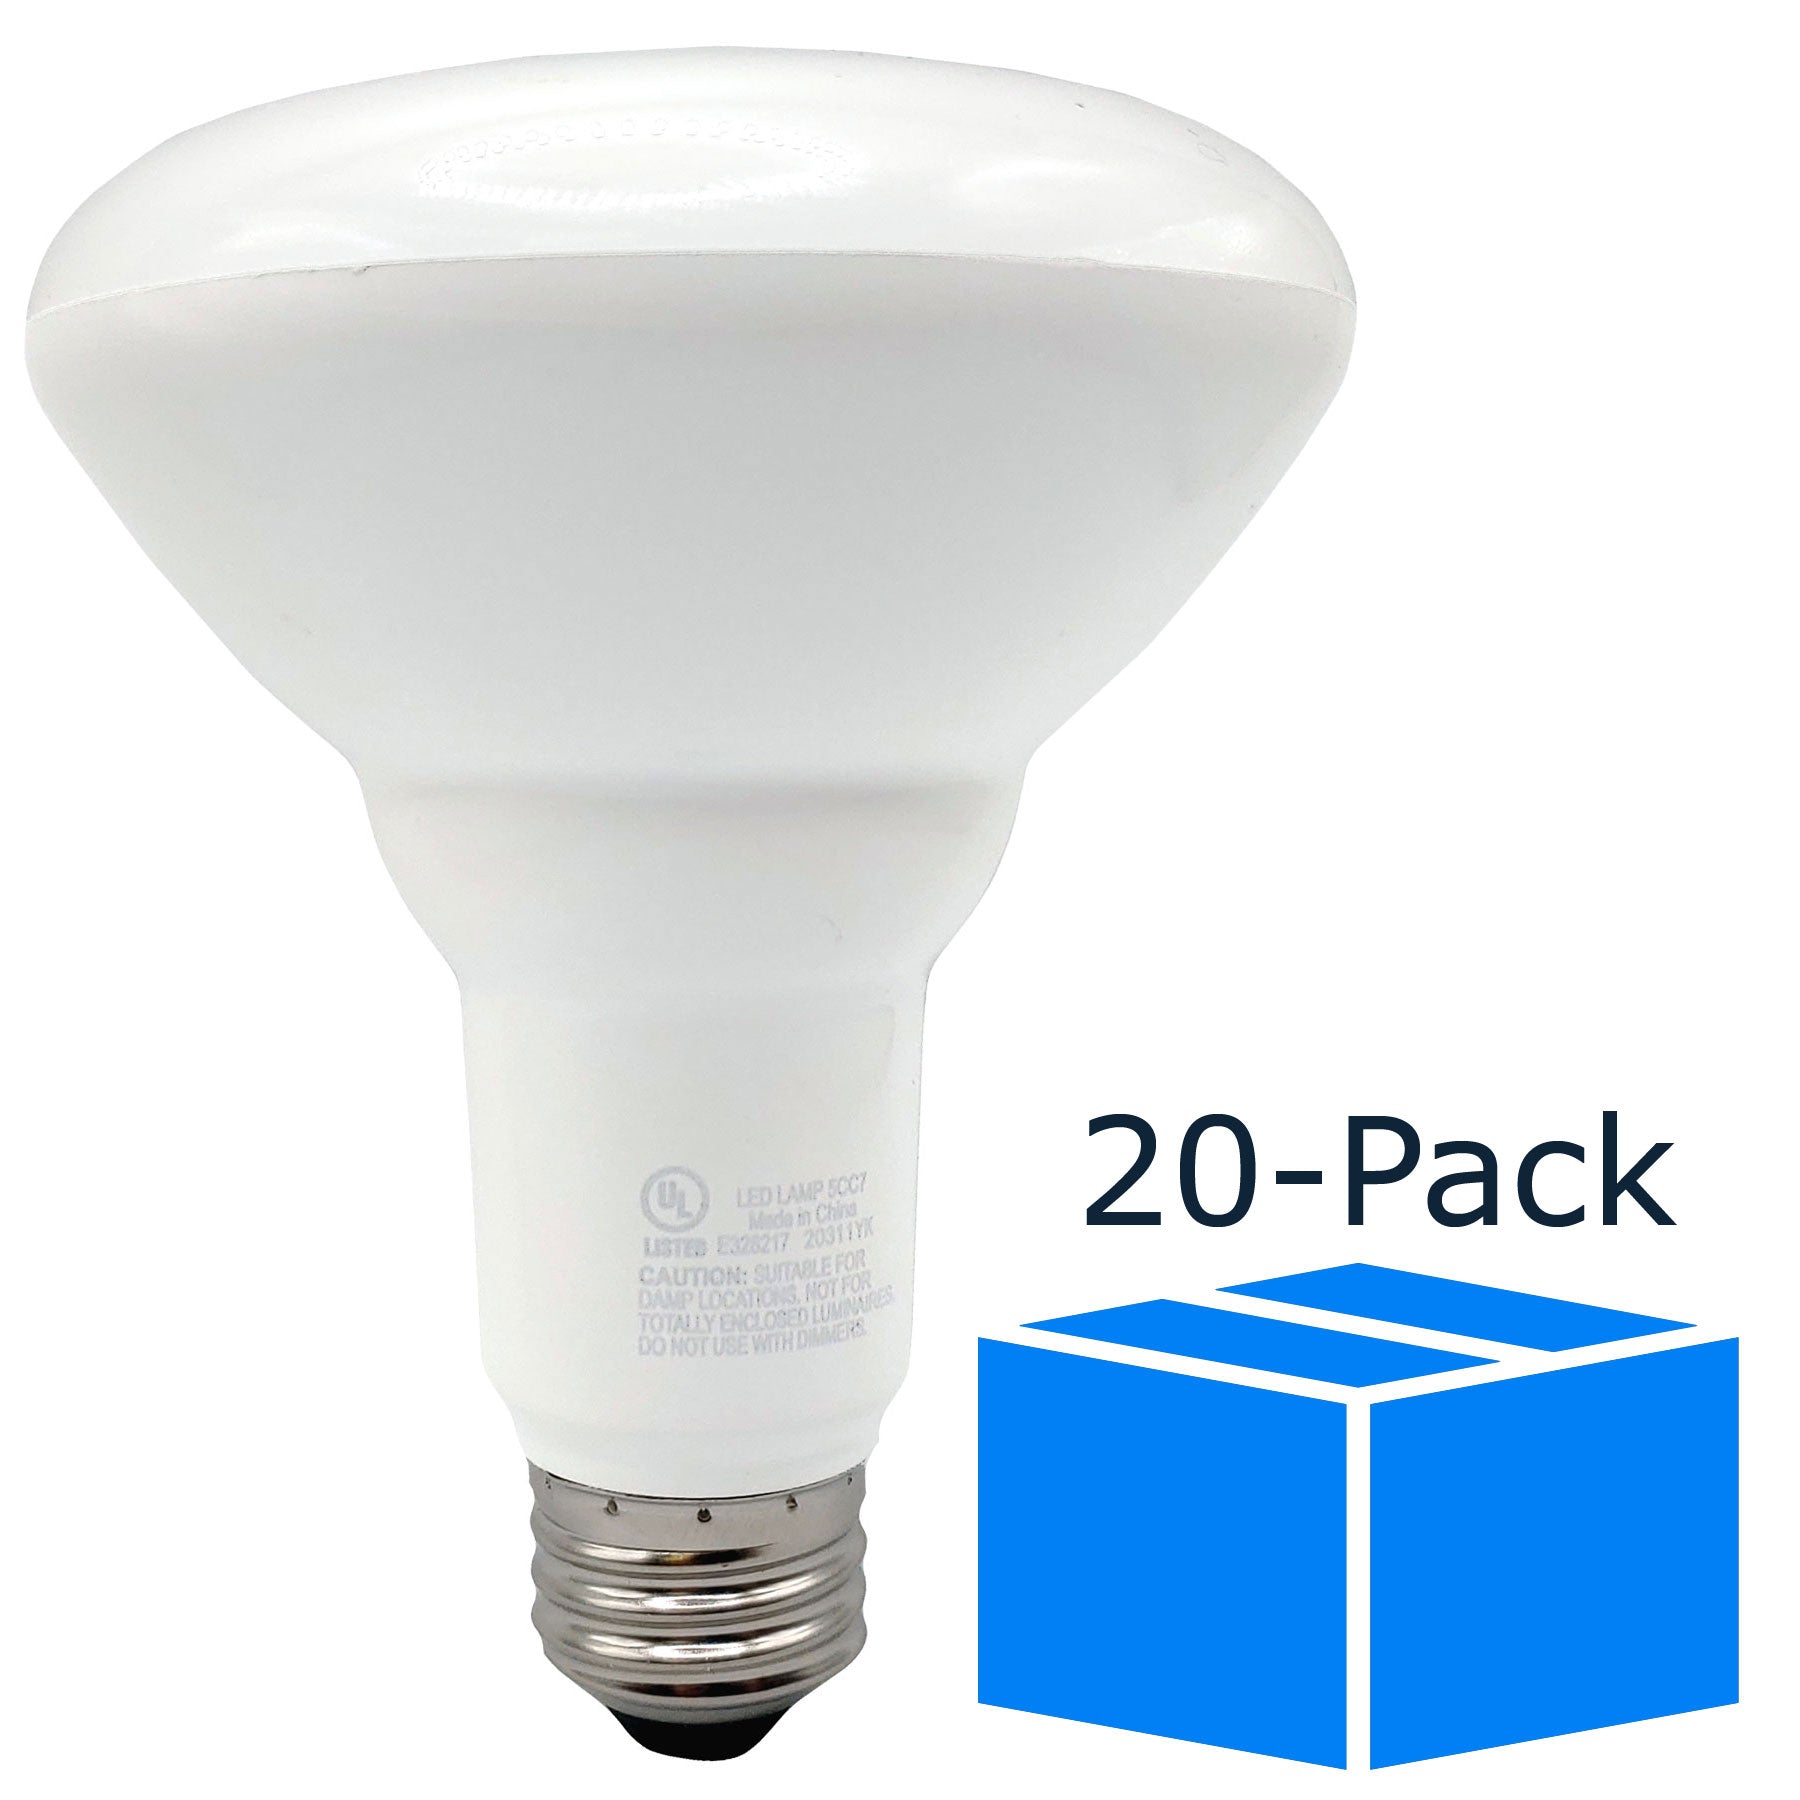 Indoor Flood 65-Watt Equivalent BR30 E26 Contractor LED Light Bulb (20-Pack)